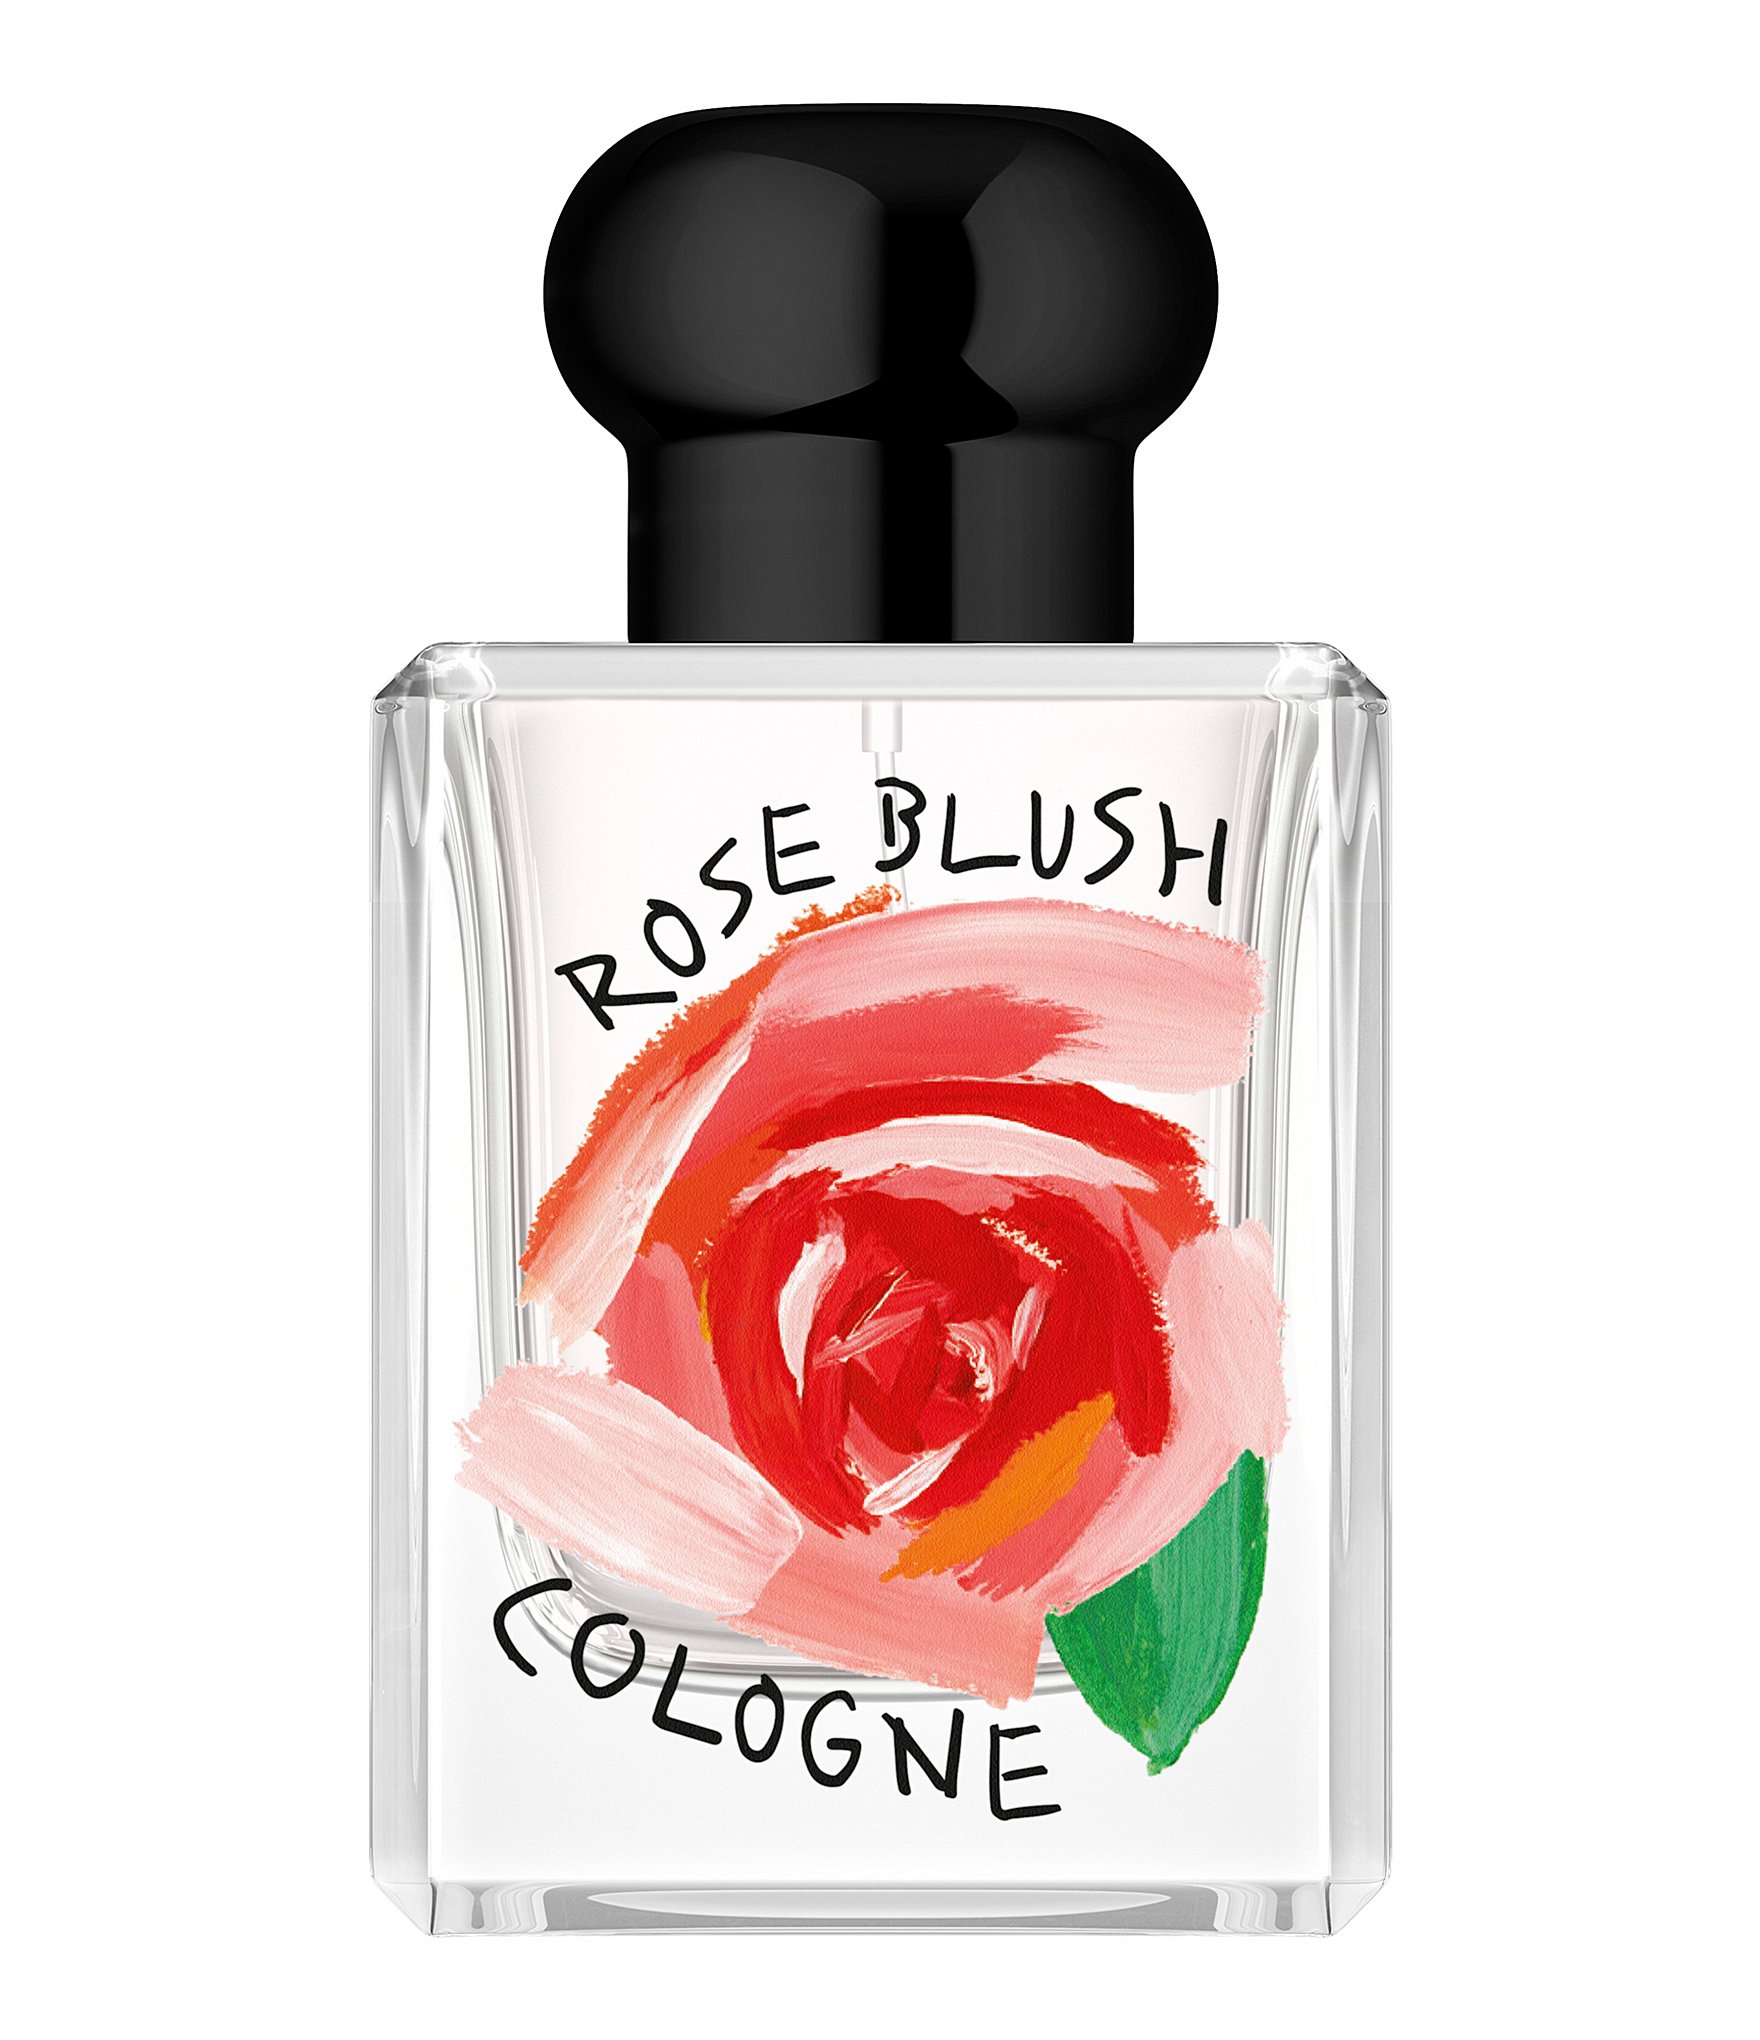 Jo Malone London Rose Blush Cologne Limited Edition | Dillard's